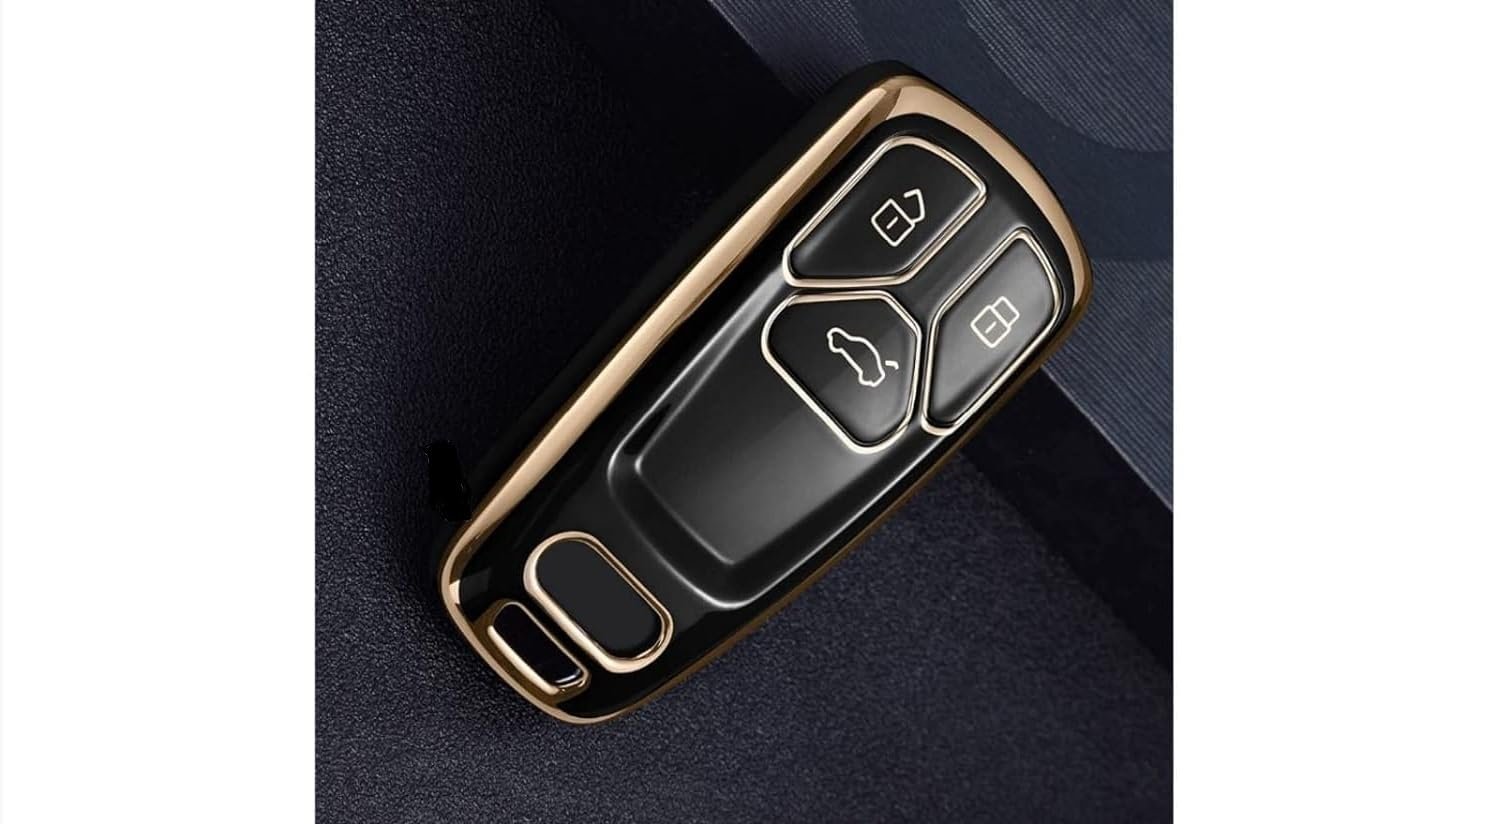 TPU Car Key Cover Compatible with Au-di TT TTS A4 Q7 Smart Key Cover (Gold/Black) Image 